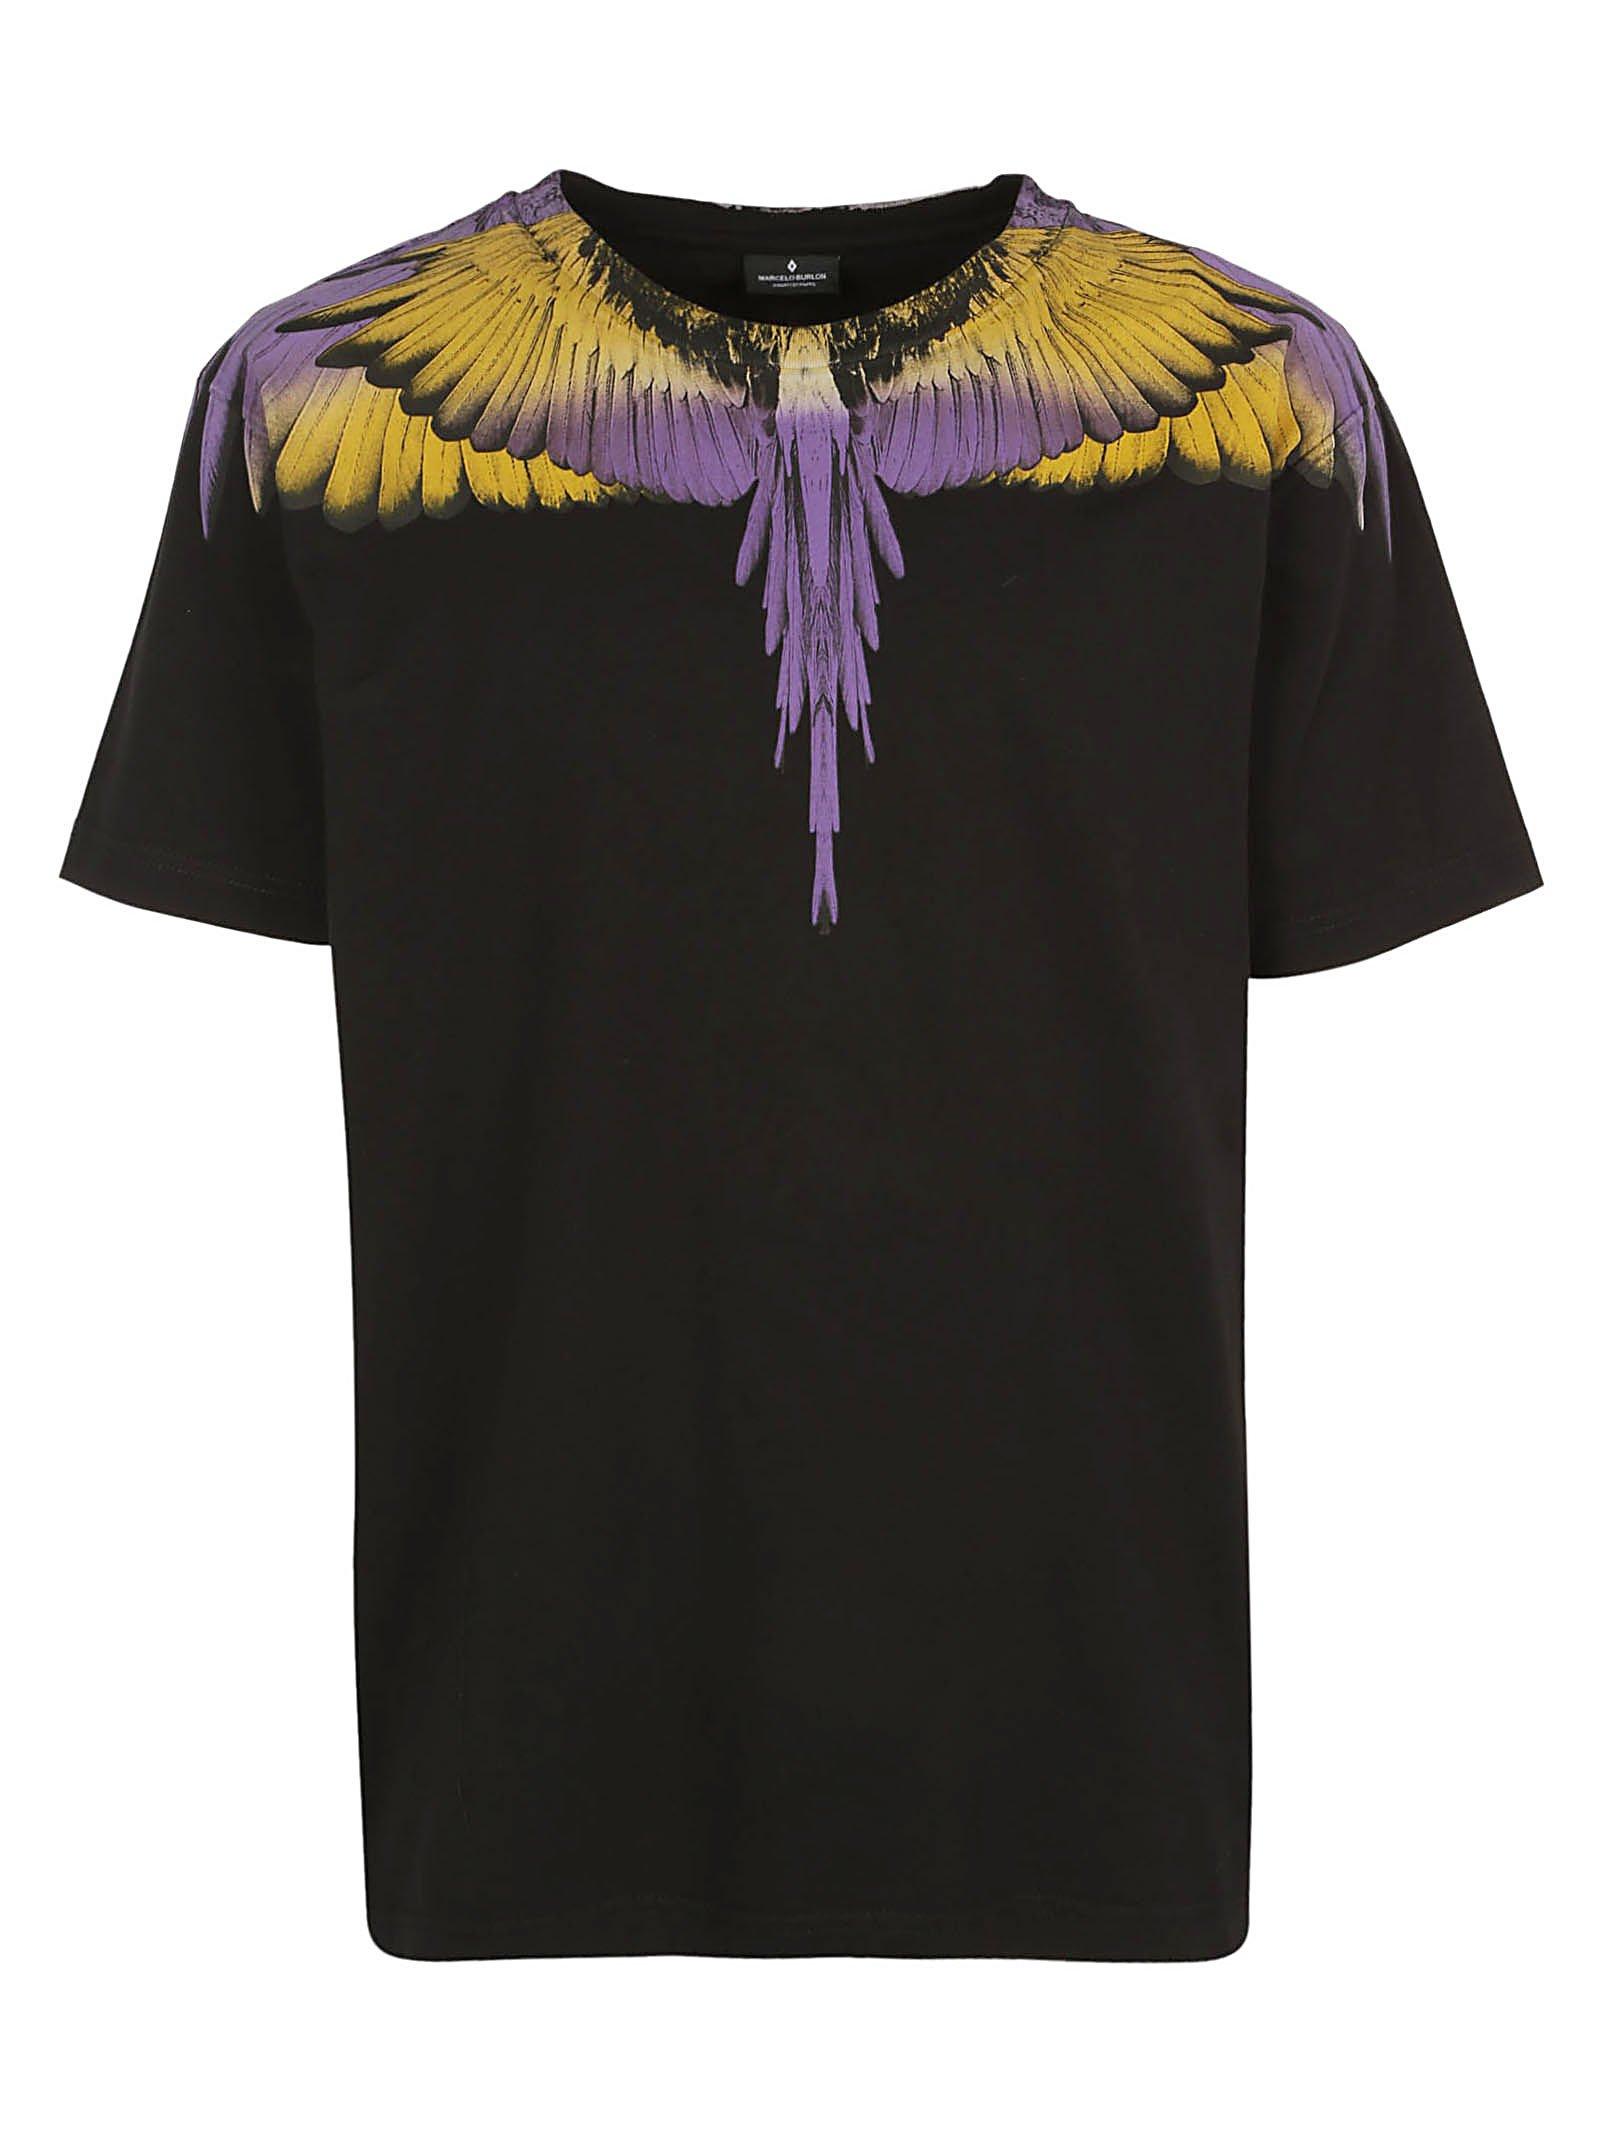 Marcelo Burlon Cotton Wings Black T-shirt With Yellow Purple Print for Men - Lyst